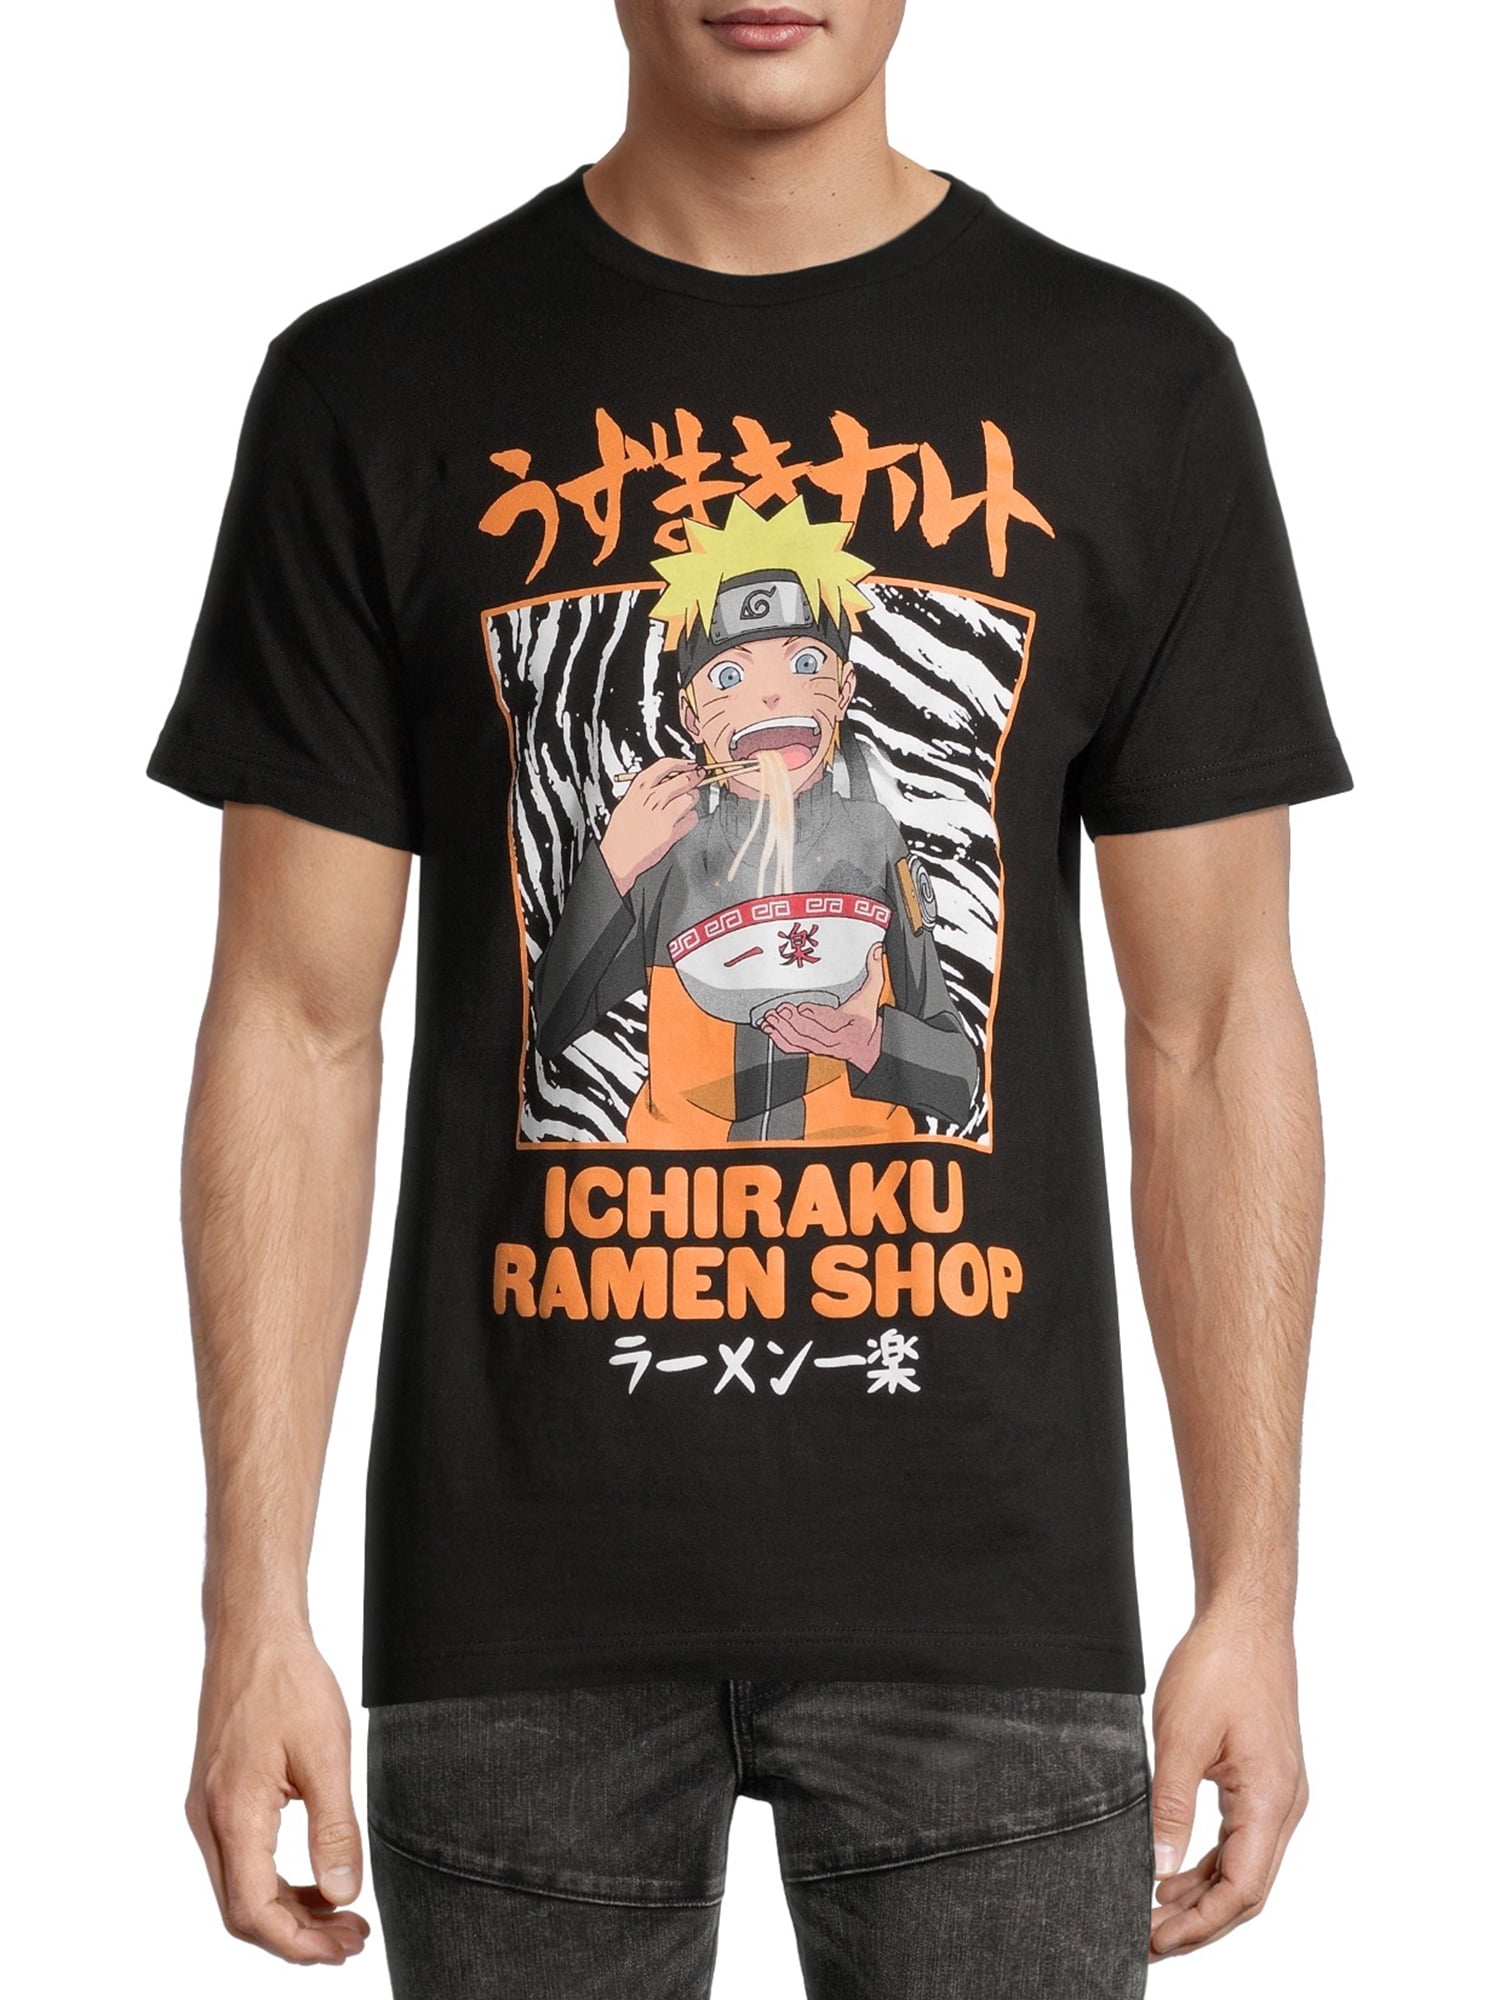 Naruto Shippuden Men's and Big Ramen Shop Graphic T-Shirt Walmart.com